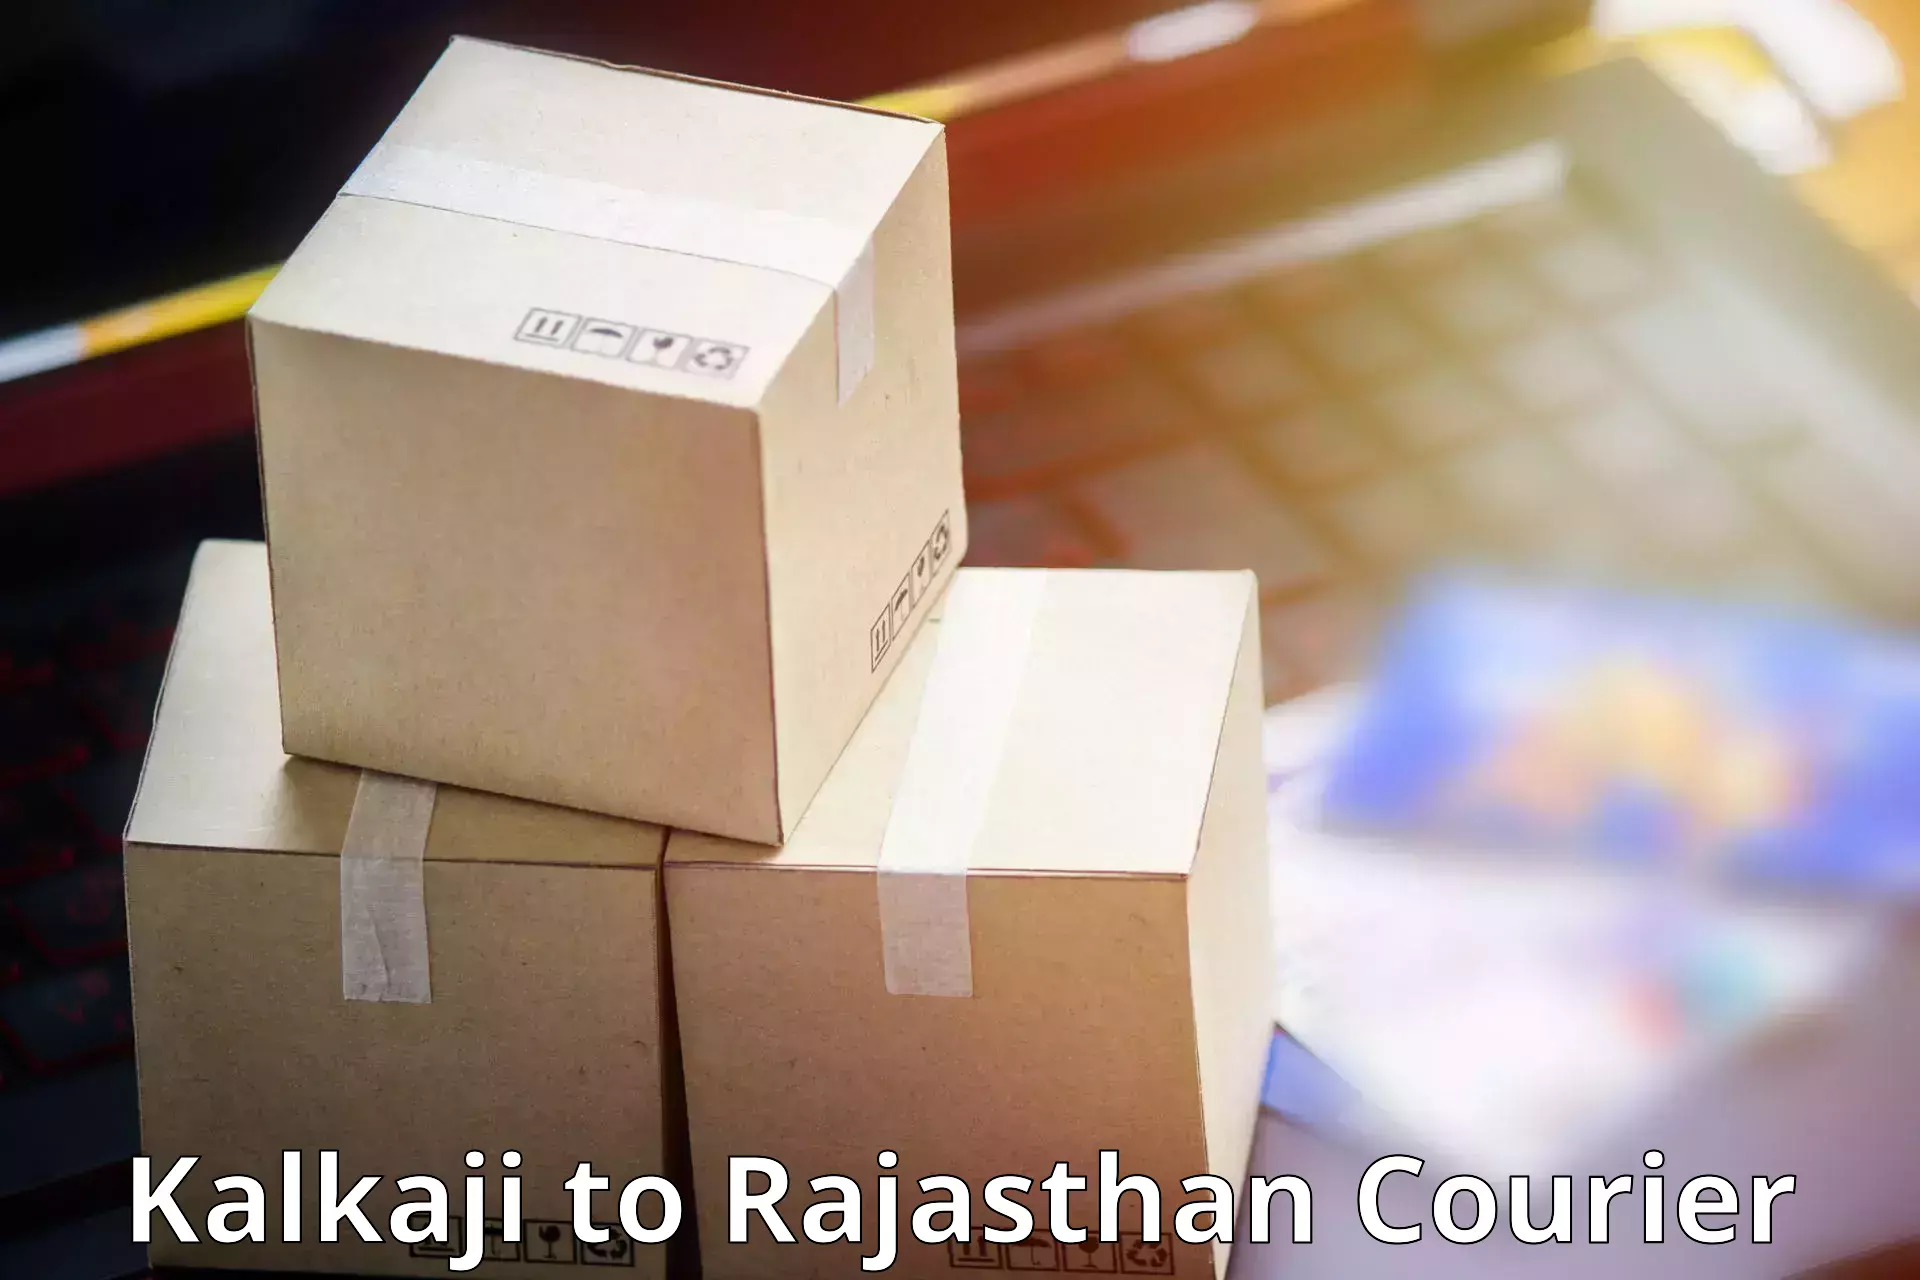 Courier service innovation Kalkaji to Chhabra